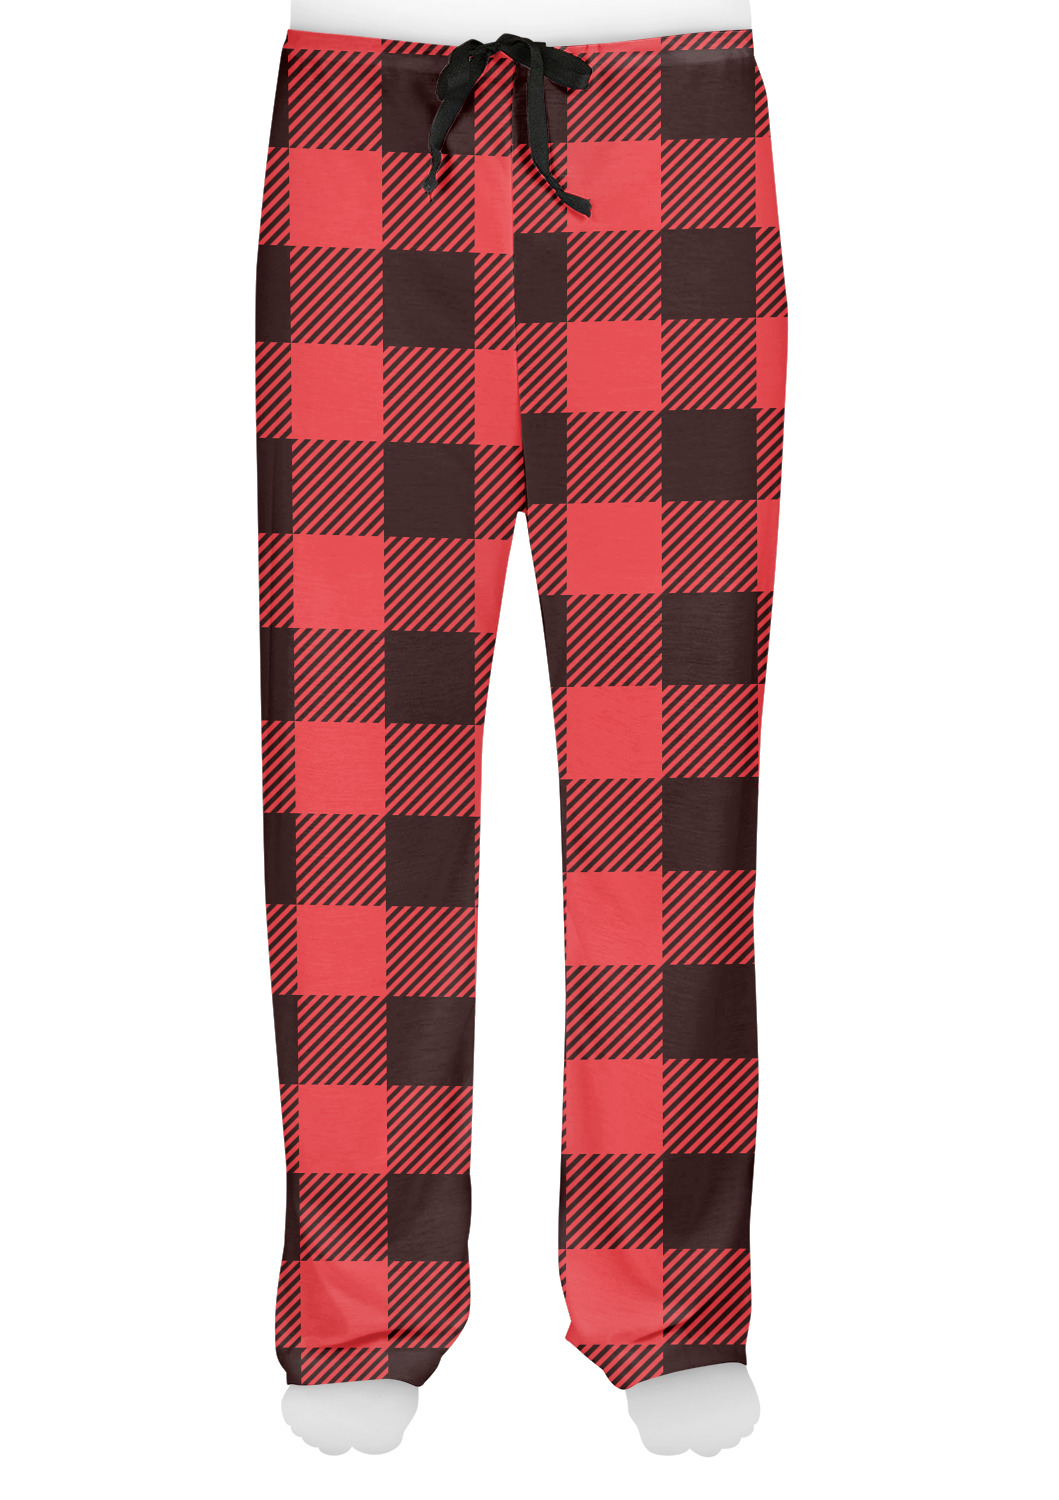 Custom Lumberjack Plaid Mens Pajama Pants